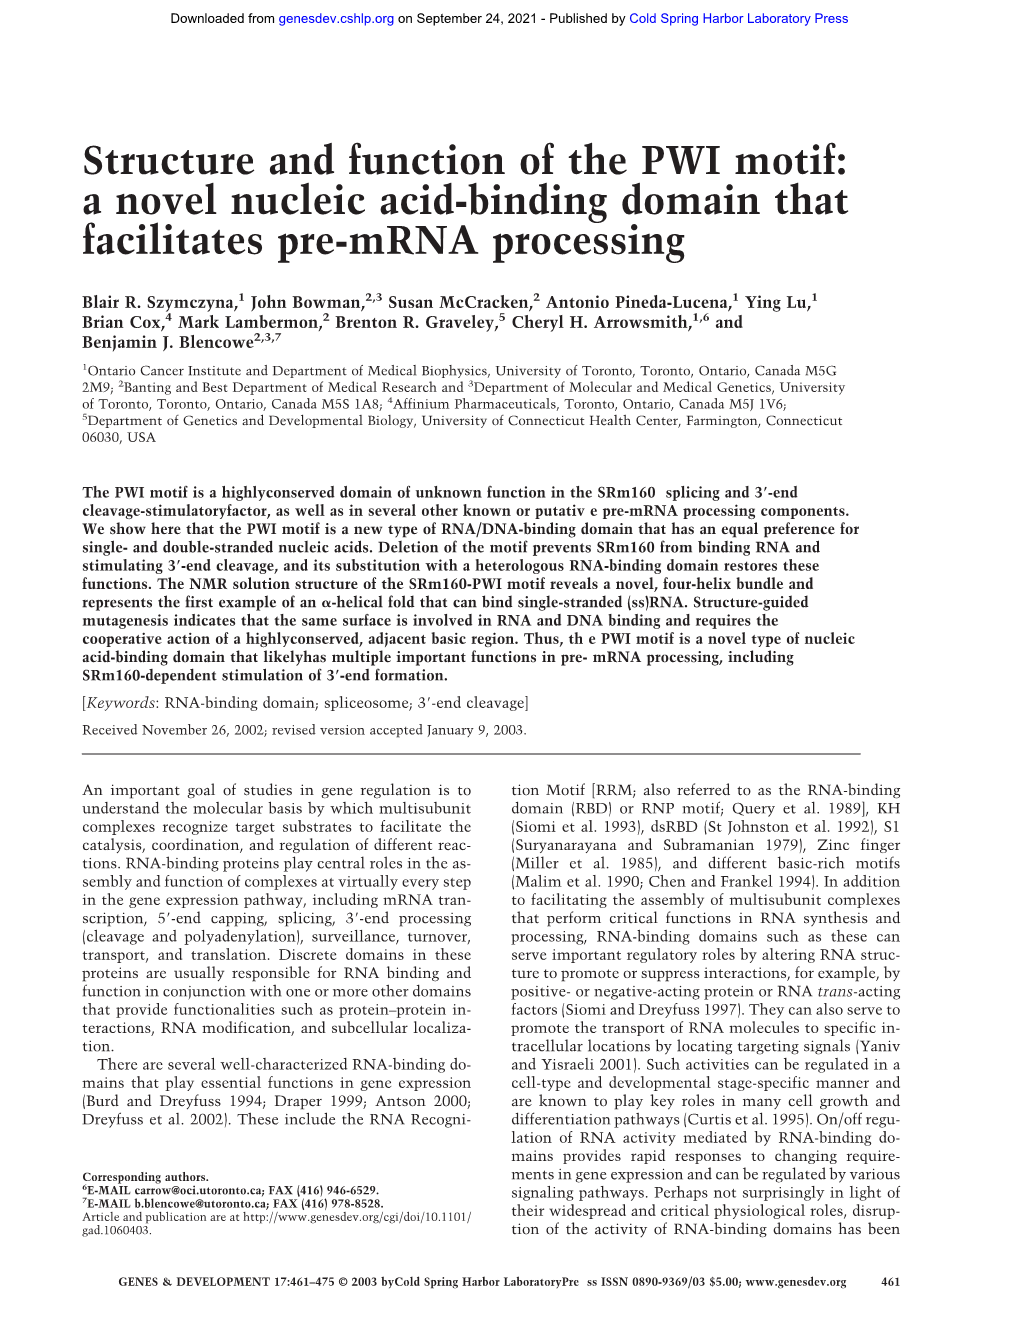 A Novel Nucleic Acid-Binding Domain That Facilitates Pre-Mrna Processing